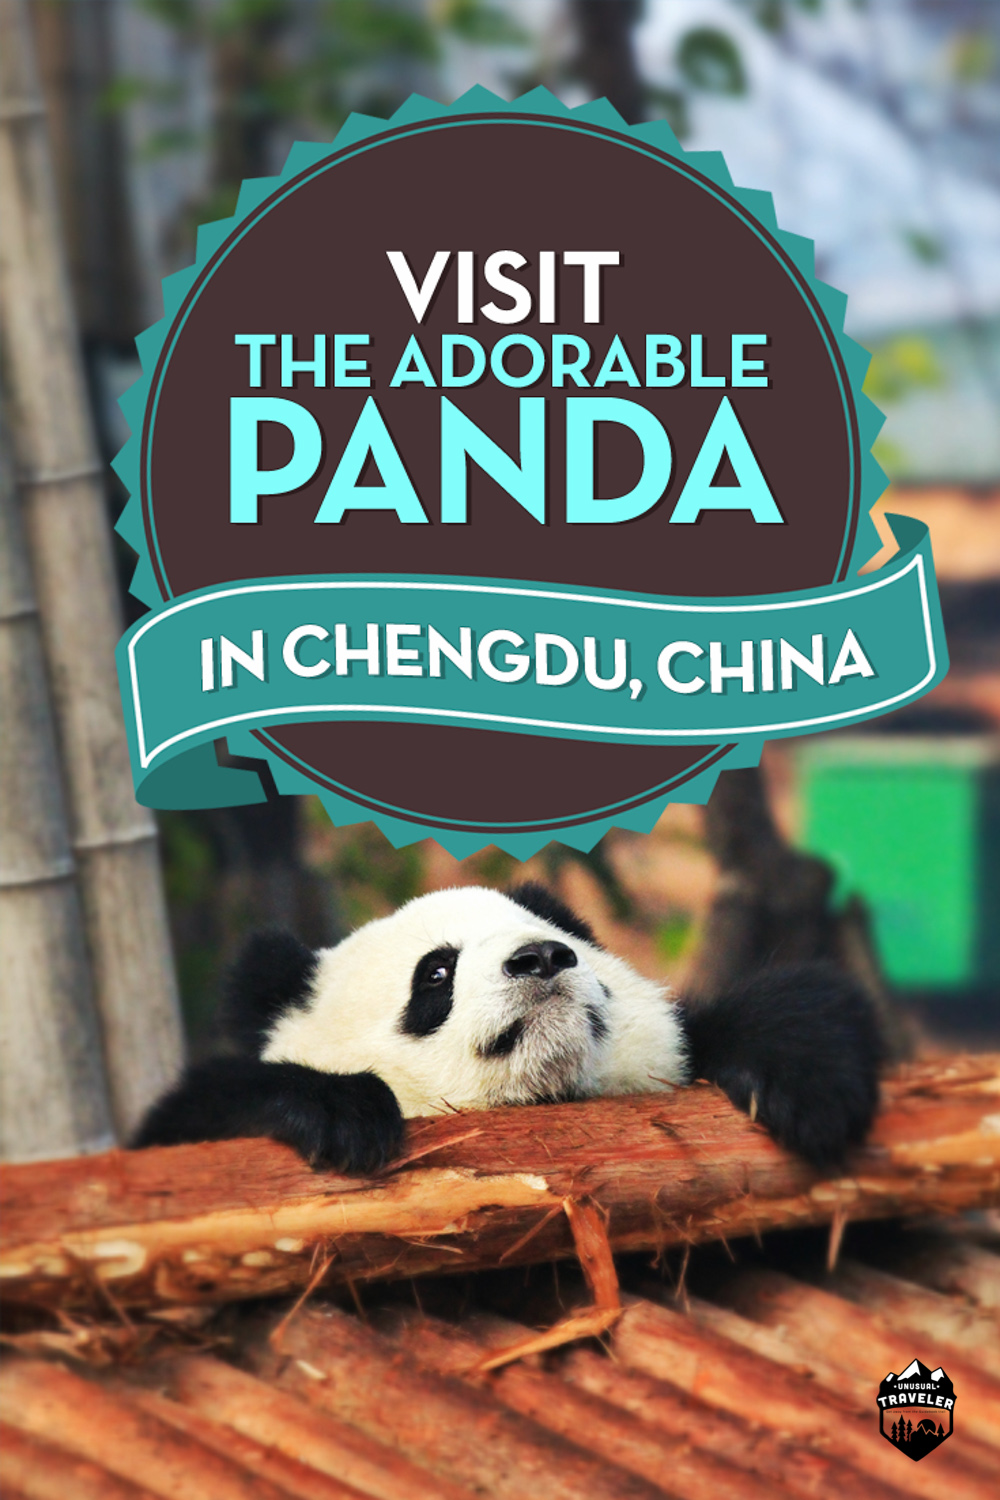 Chengdu Research Base of Giant Panda Center Tour China